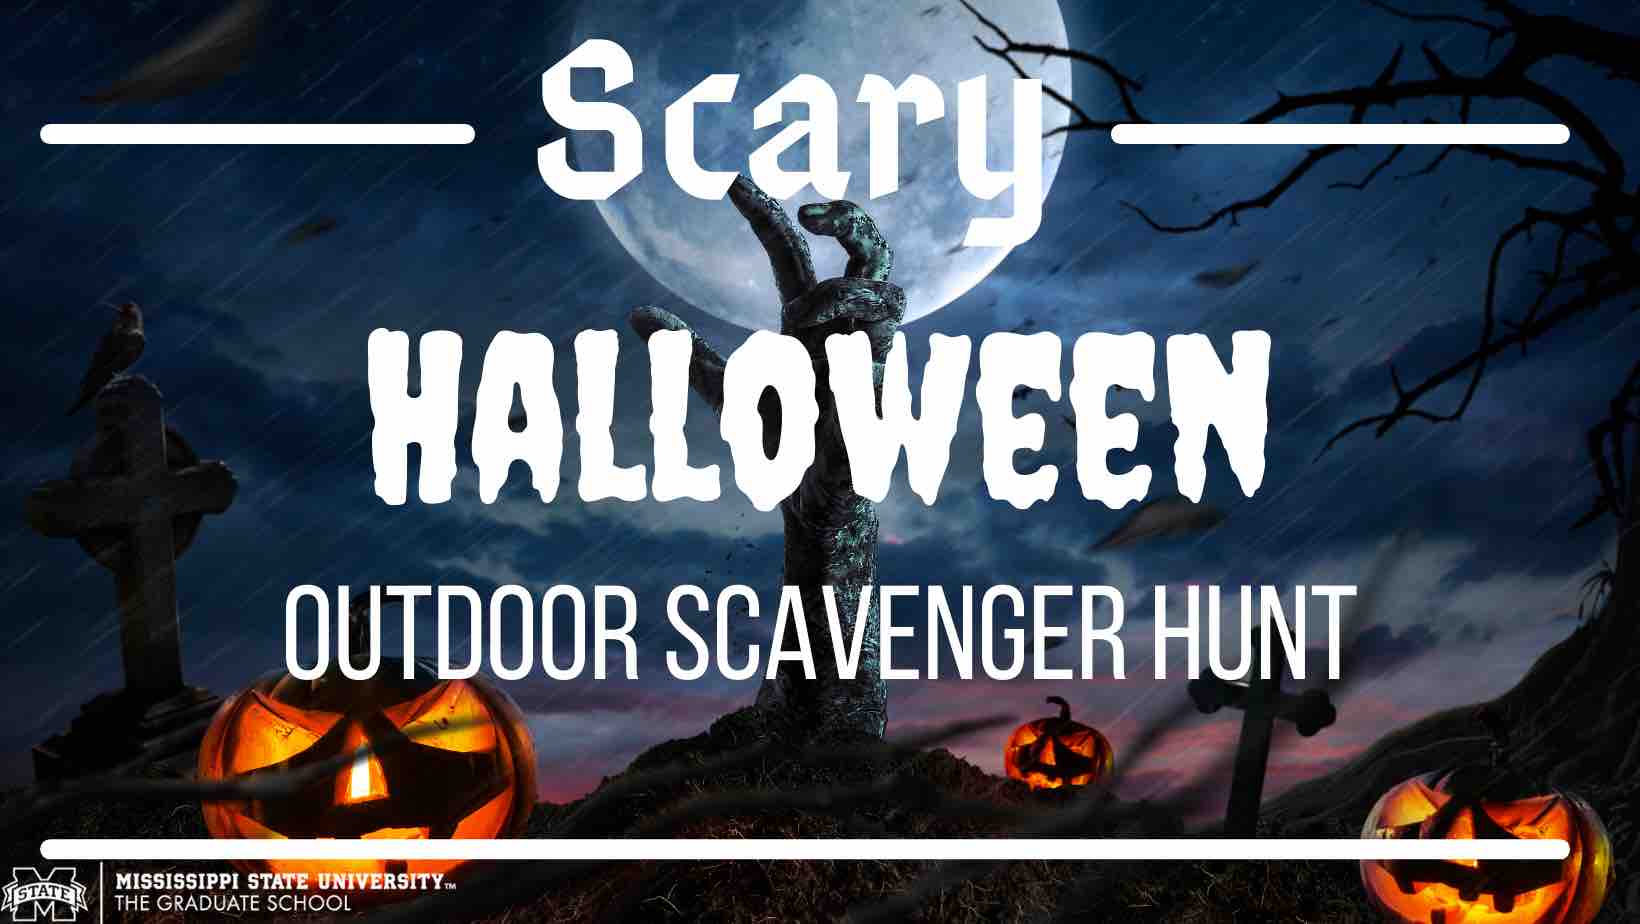 Halloween Banner Image